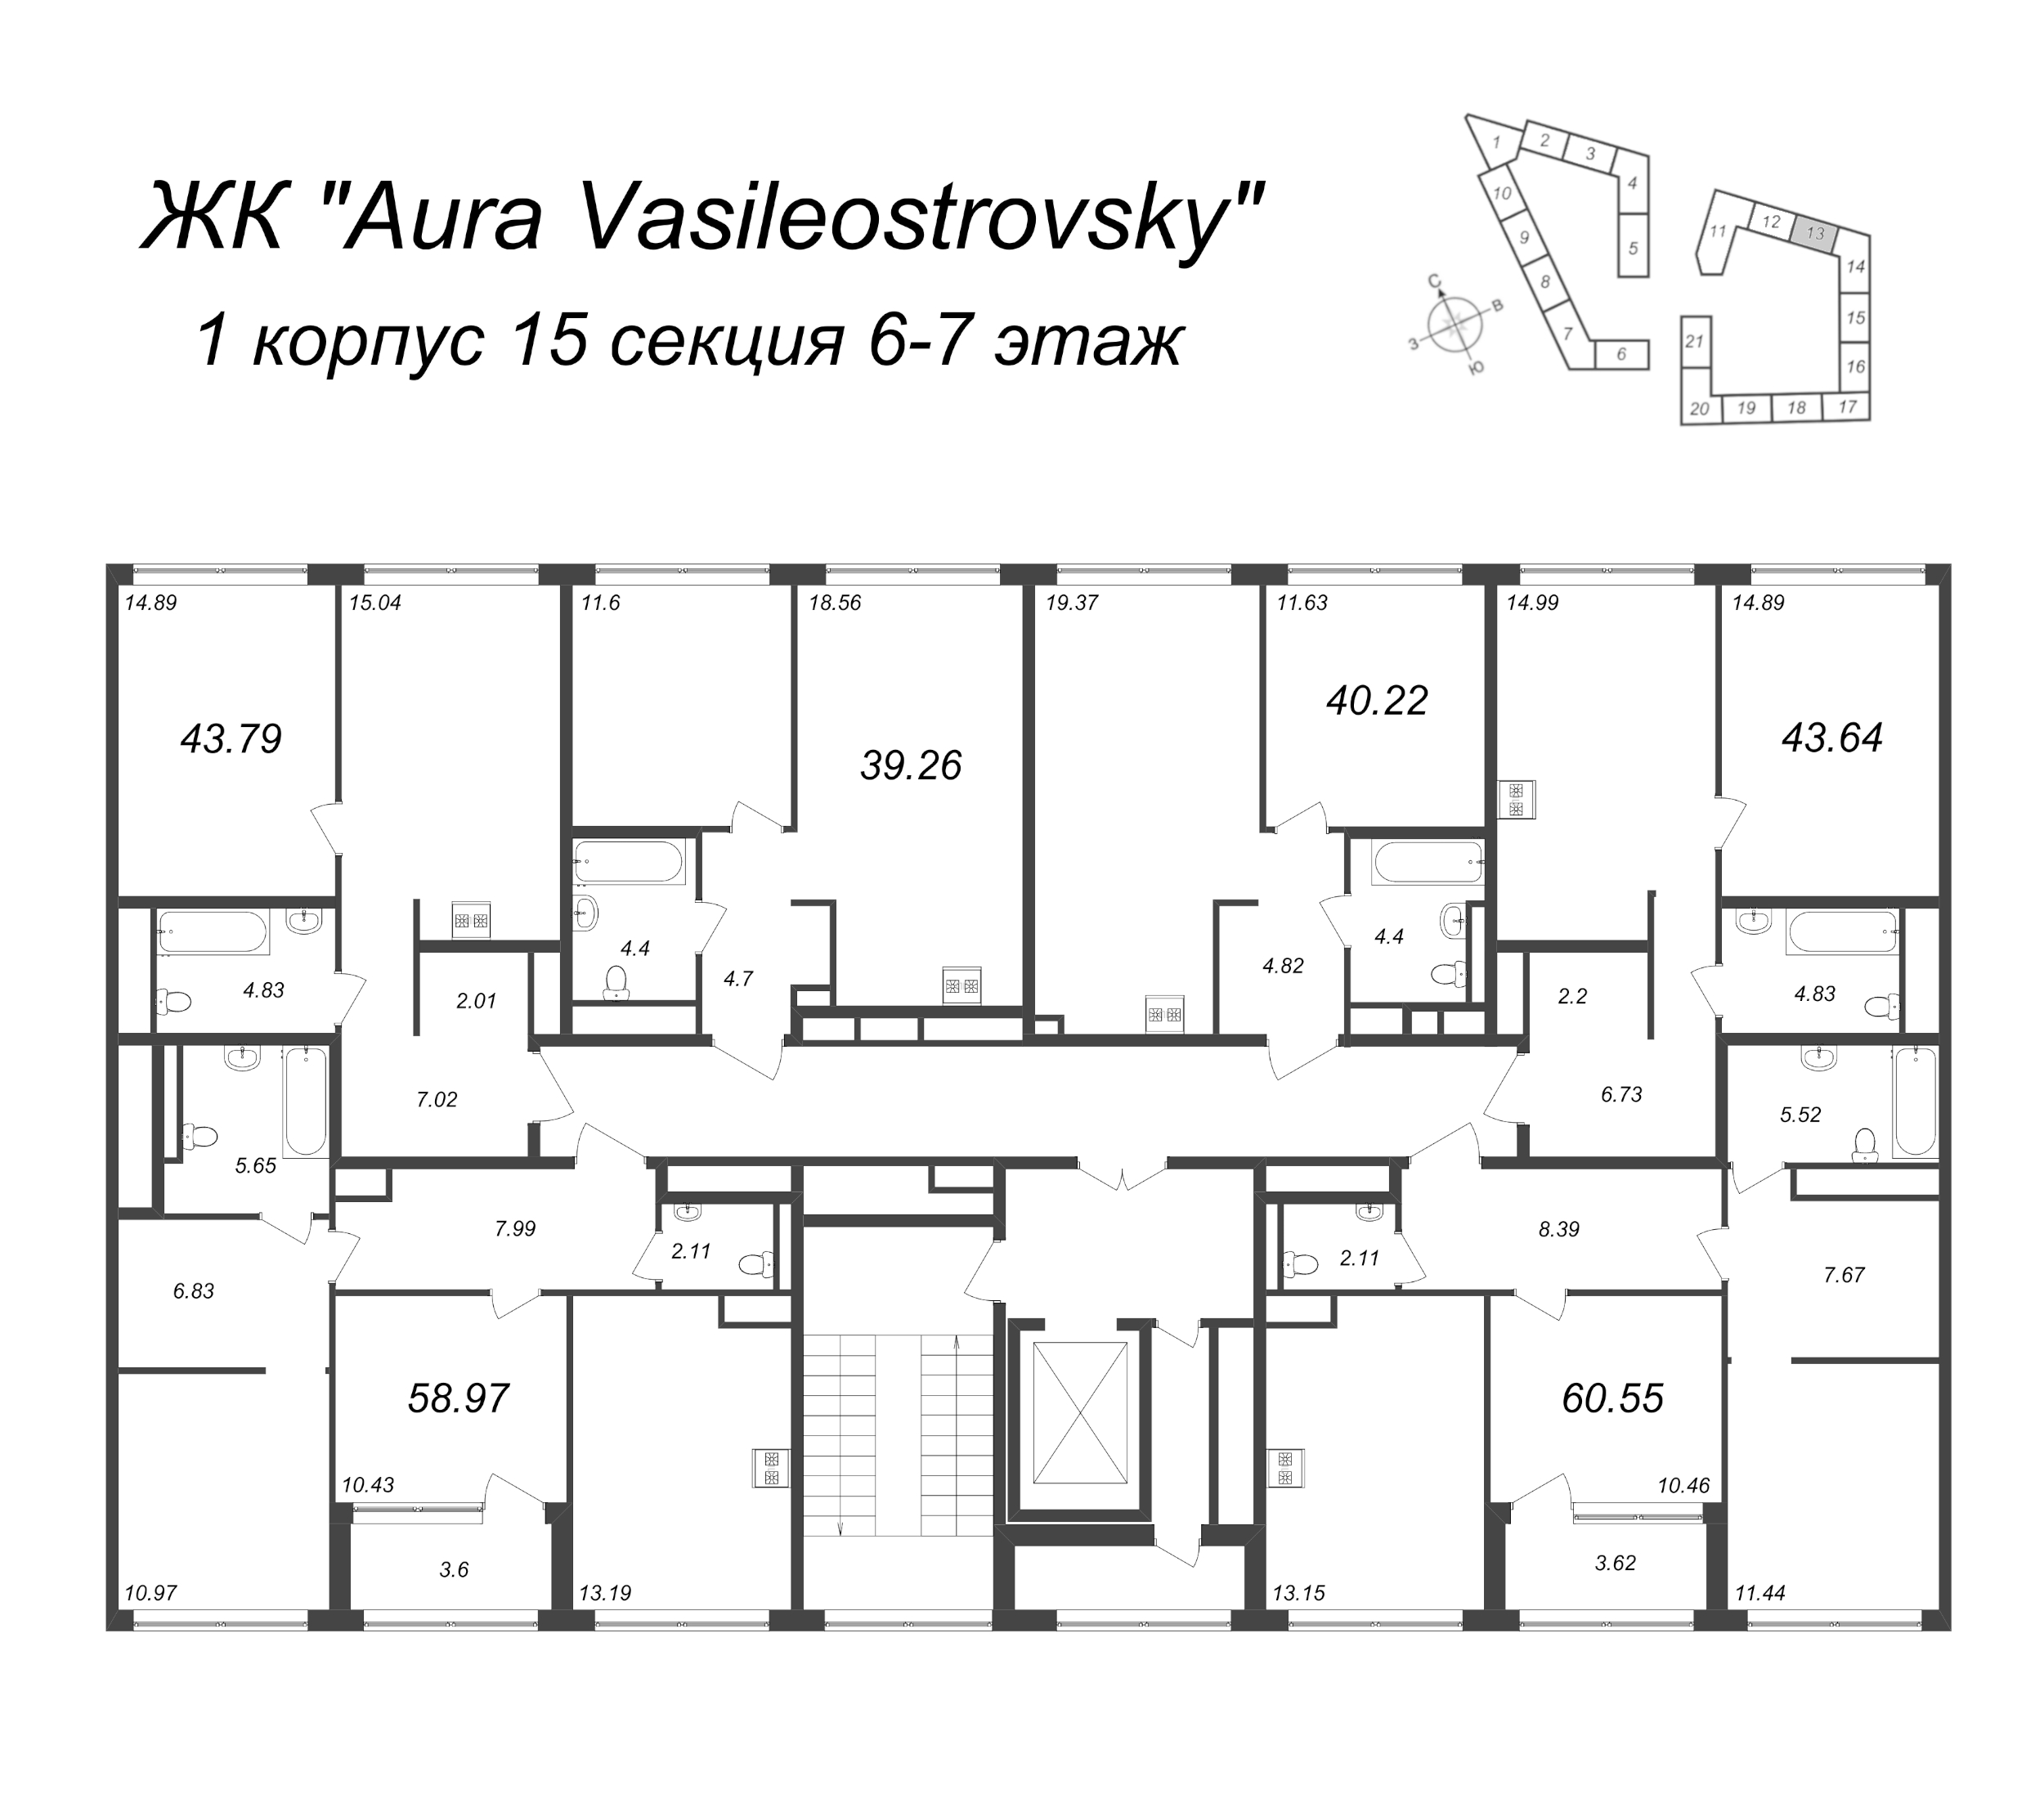 2-комнатная (Евро) квартира, 39.26 м² - планировка этажа